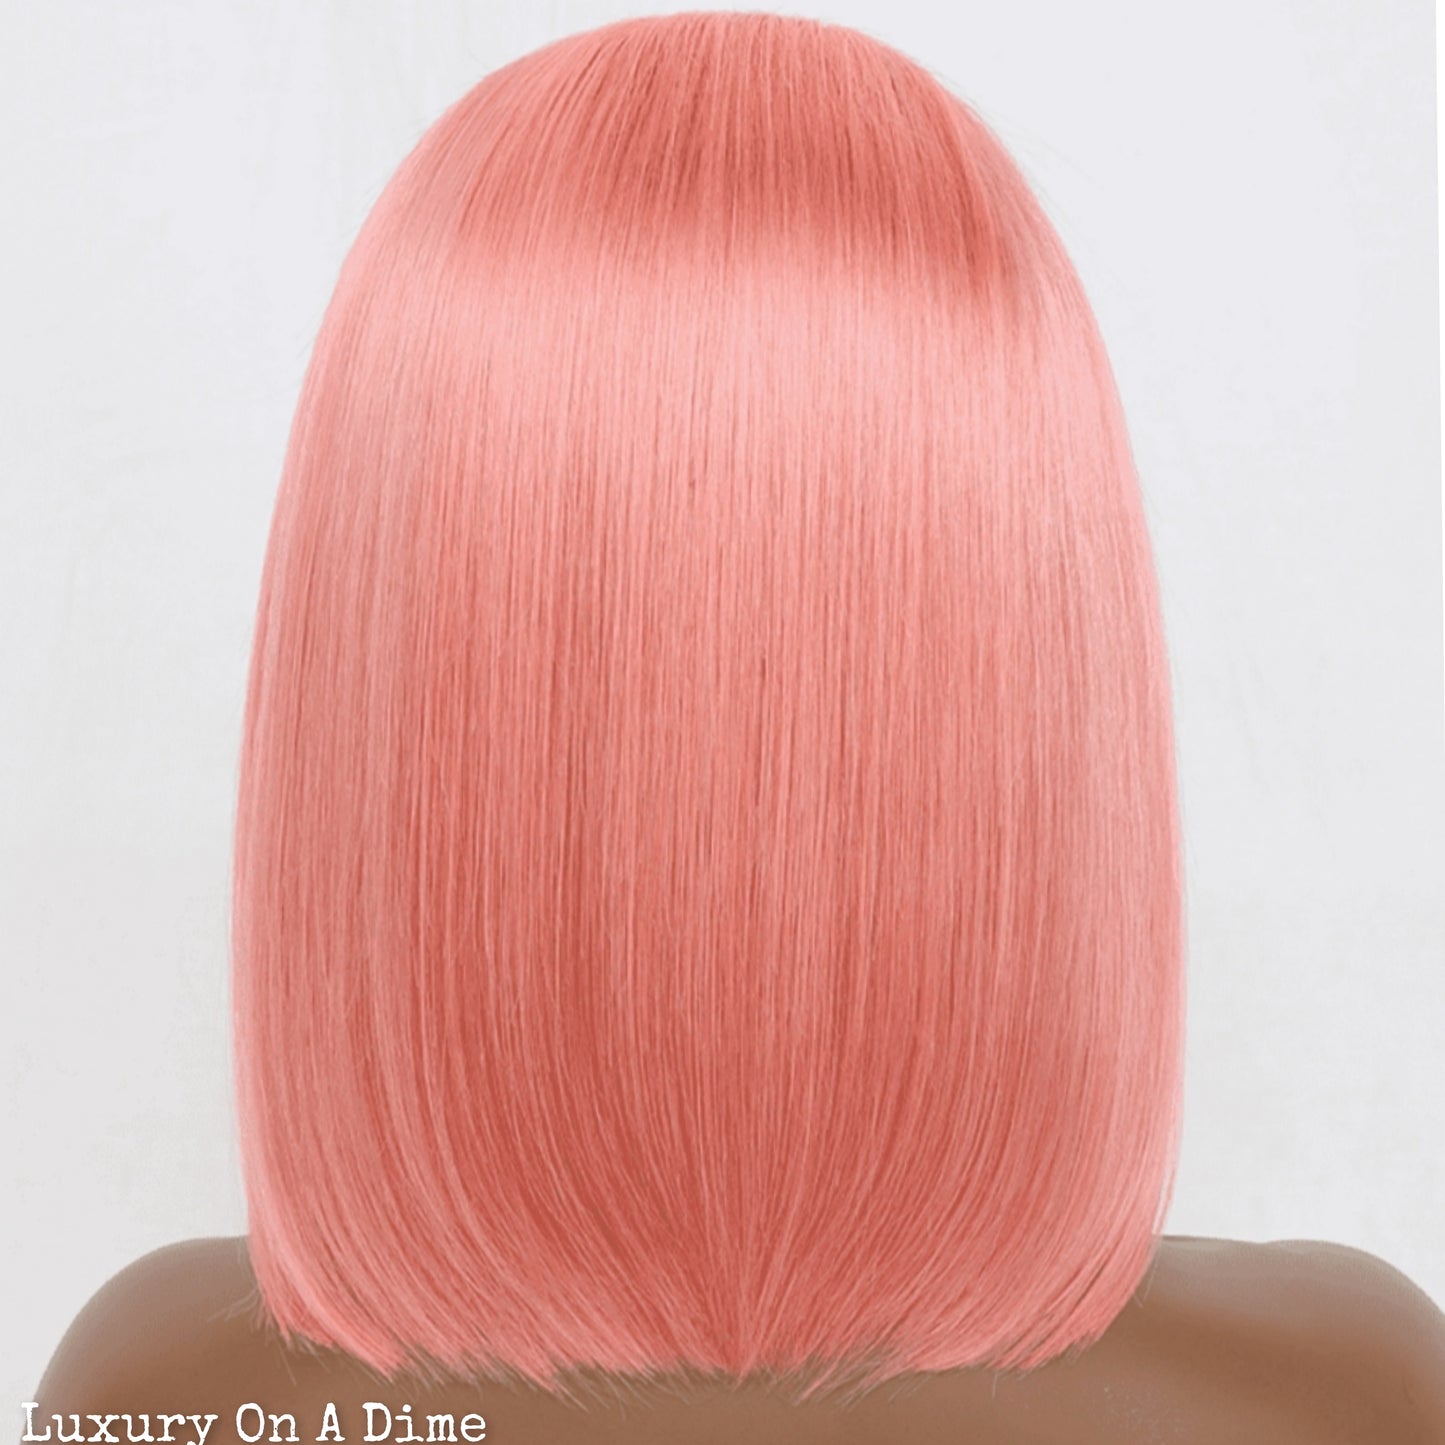 HUMAN HAIR 12" Pink 165g Lace Front Wig Thick 150% Density Shoulder Length Bob